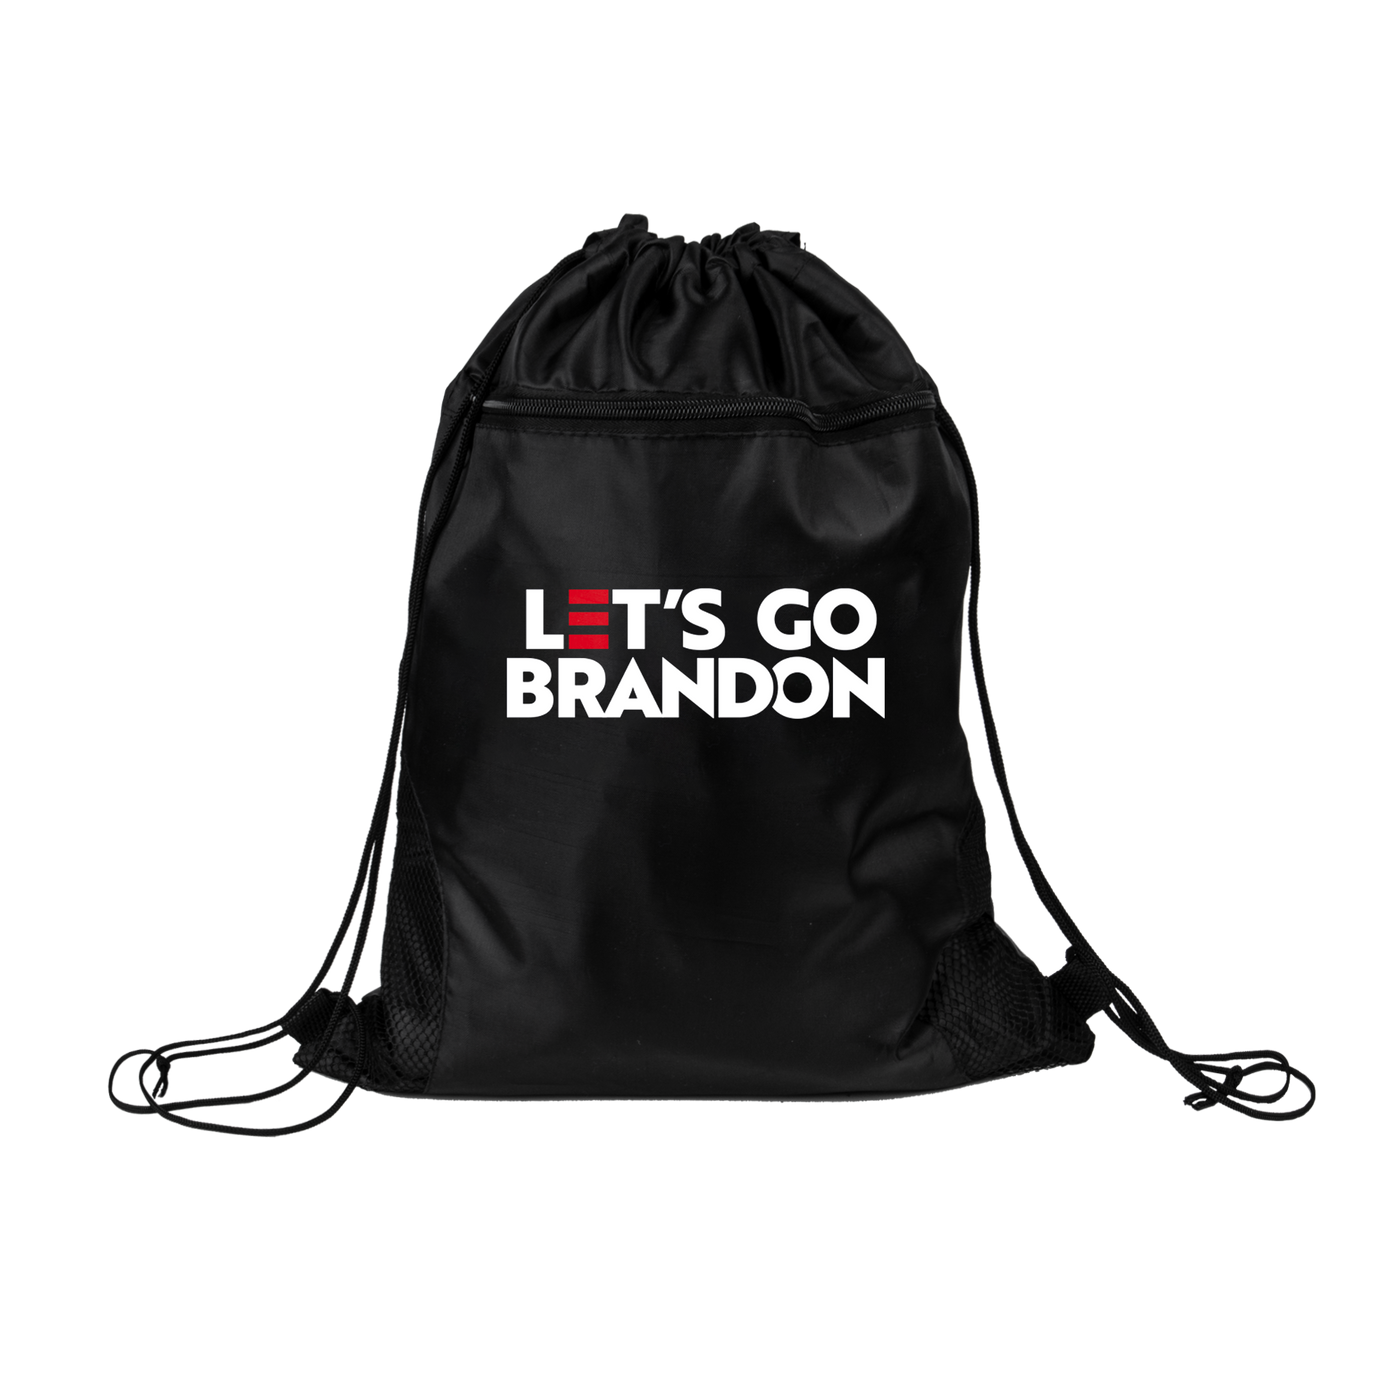 Let's Go Brandon Campaign Drawstring Bag